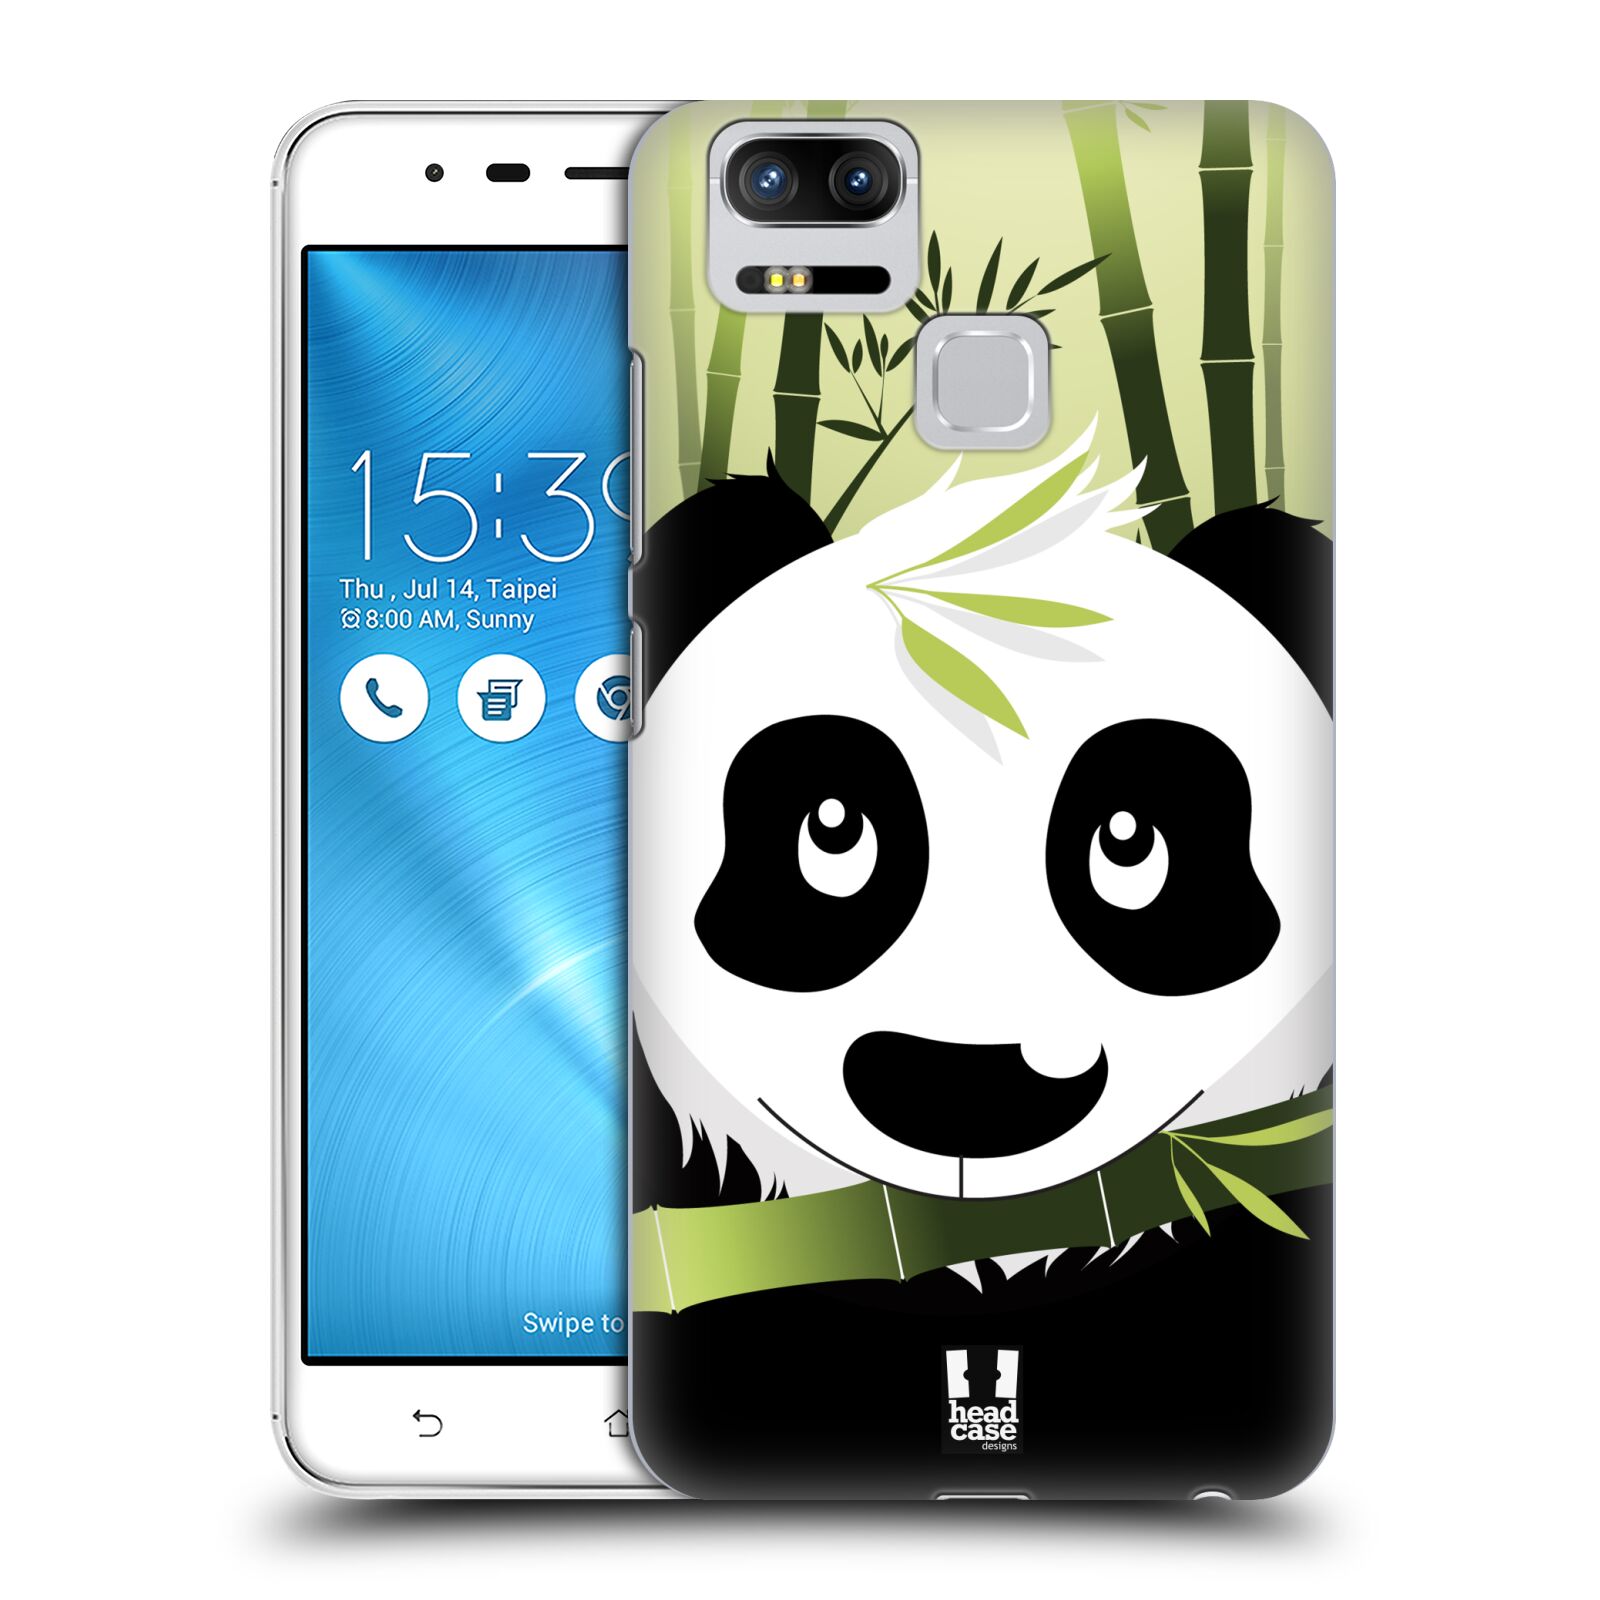 HEAD CASE plastový obal na mobil Asus Zenfone 3 Zoom ZE553KL vzor kreslená panda zelená